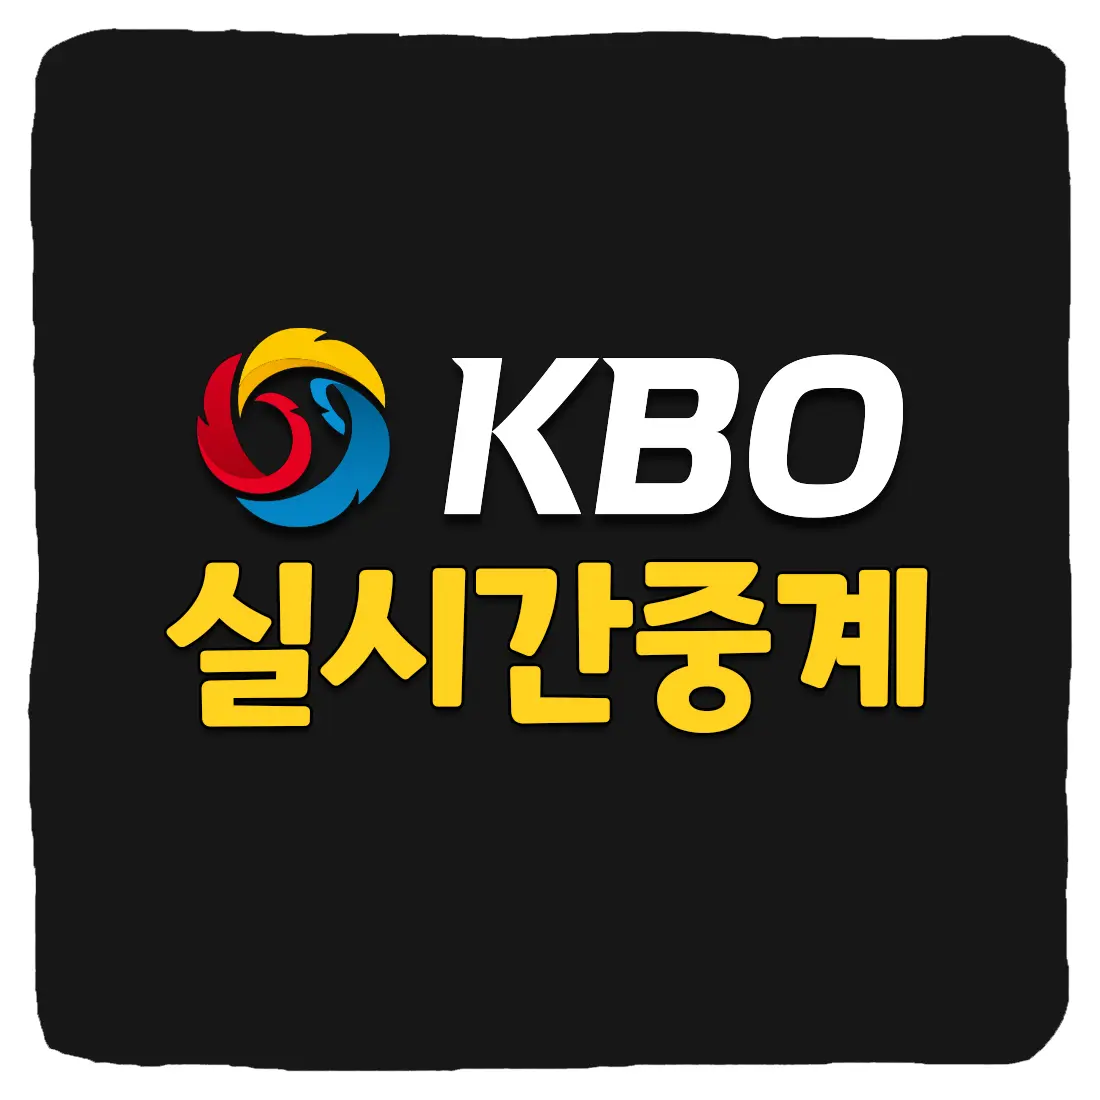 KBO 중계 및 프로야구 실시간 중계 방송 TOP 7